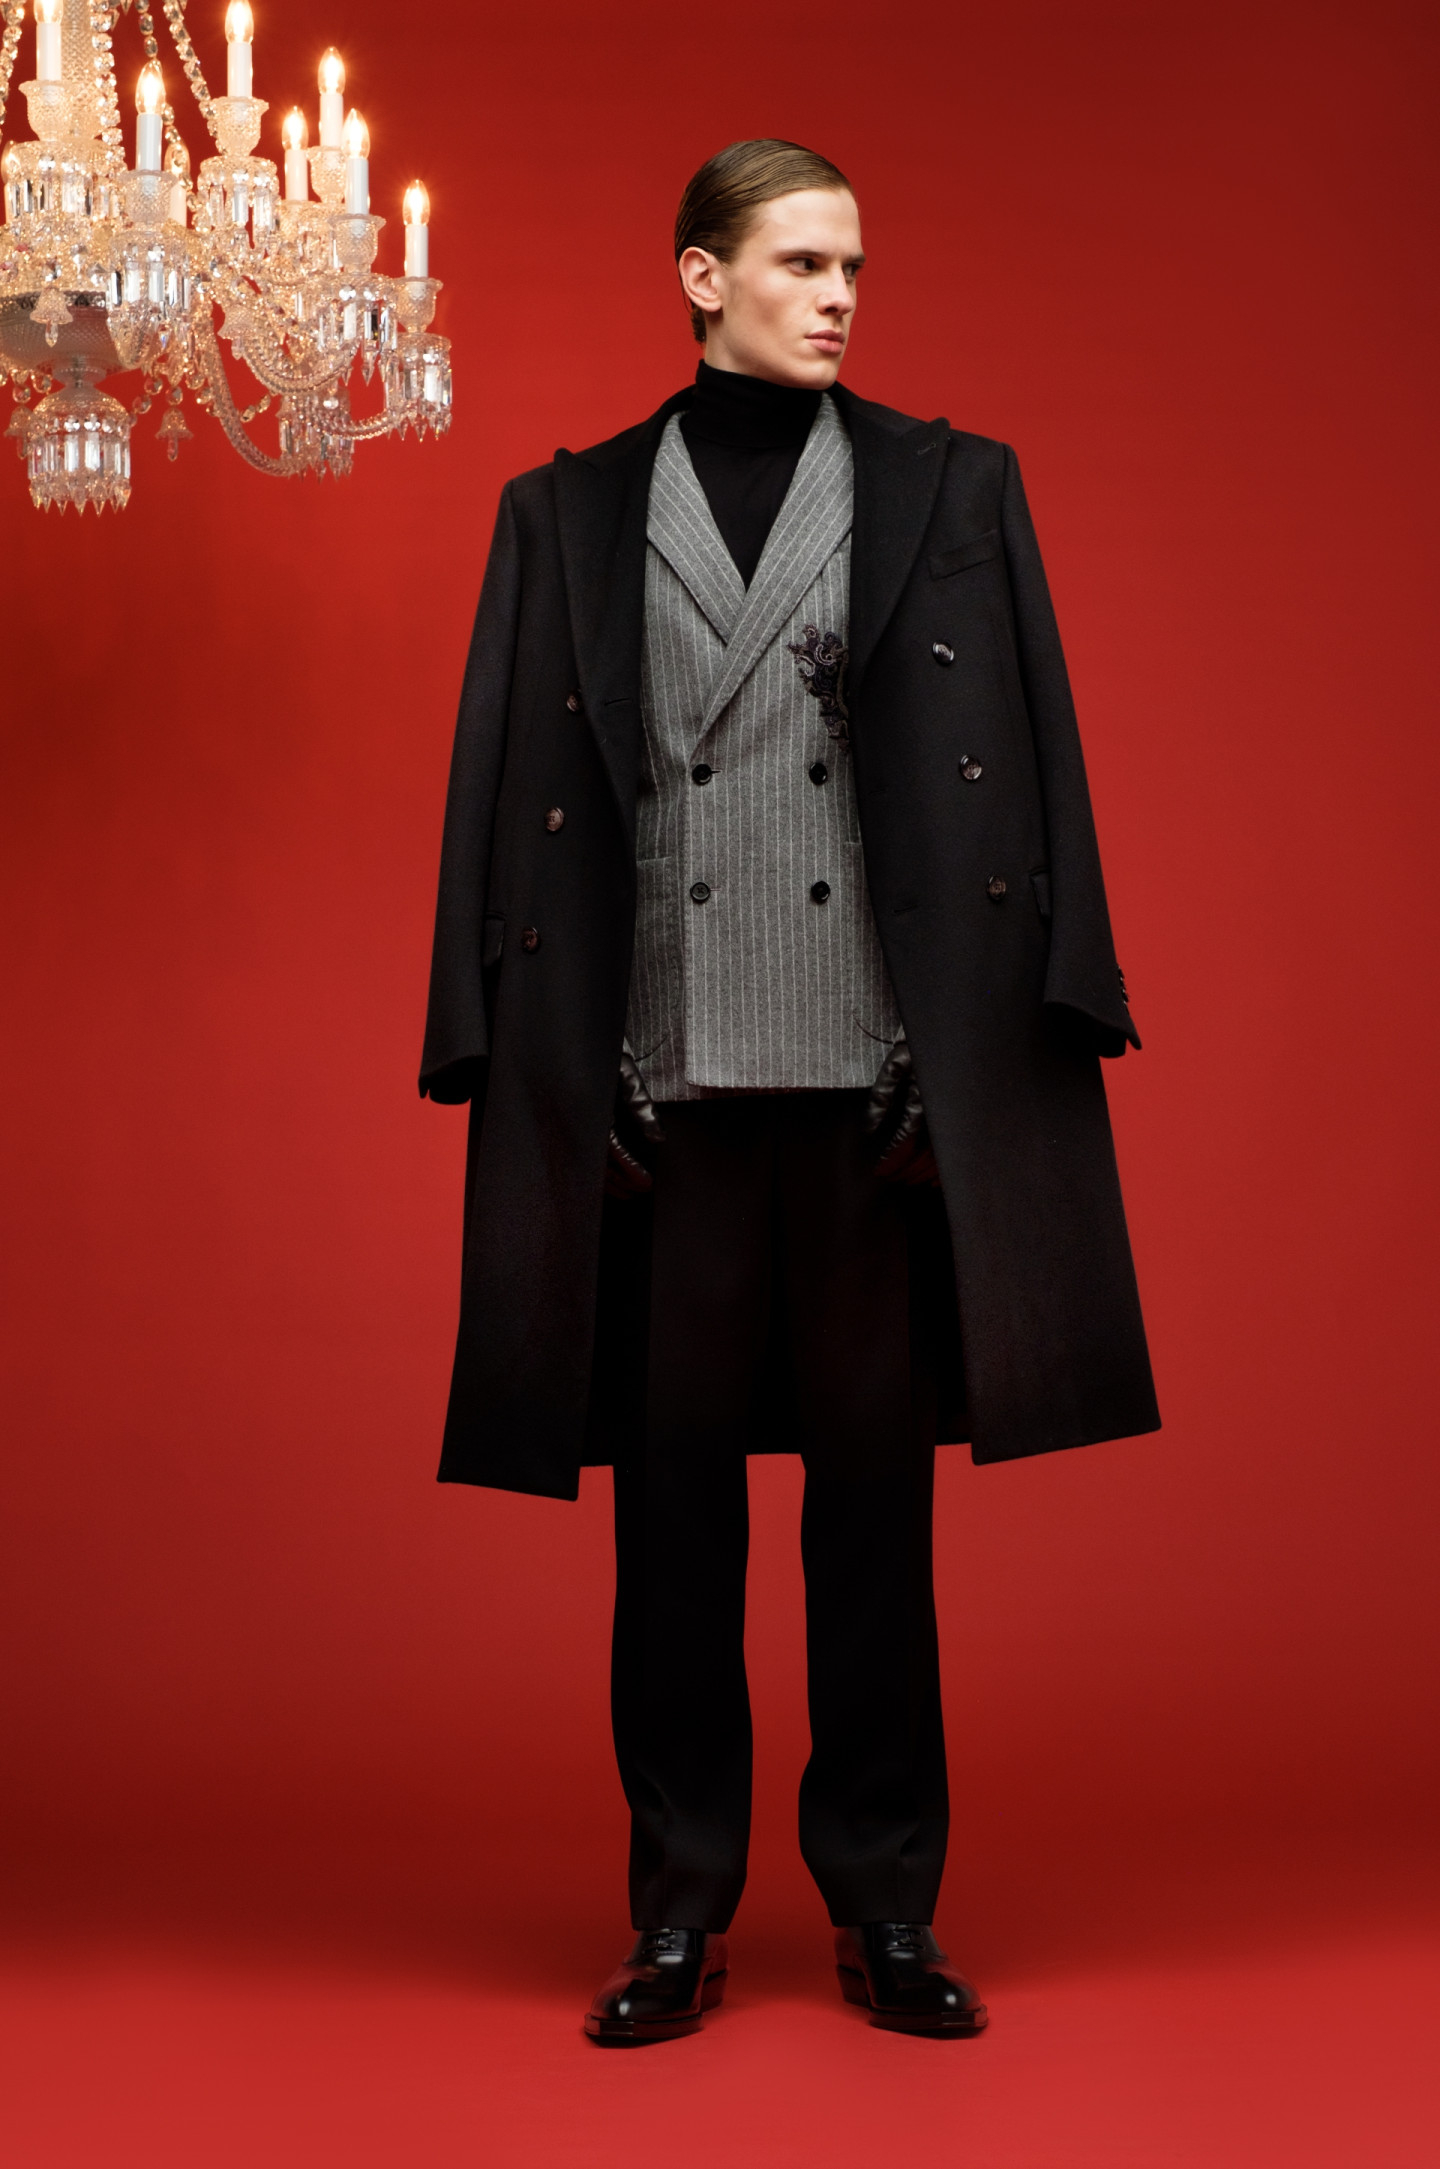 Пальто Giorgio Armani, 241 000 руб., пиджак Dolce & Gabbana, 215 000 руб., водолазка Tom Ford, 59 950 руб., брюки (75 950 руб.) и оксфорды (68 200 руб.) — все Bottega Veneta